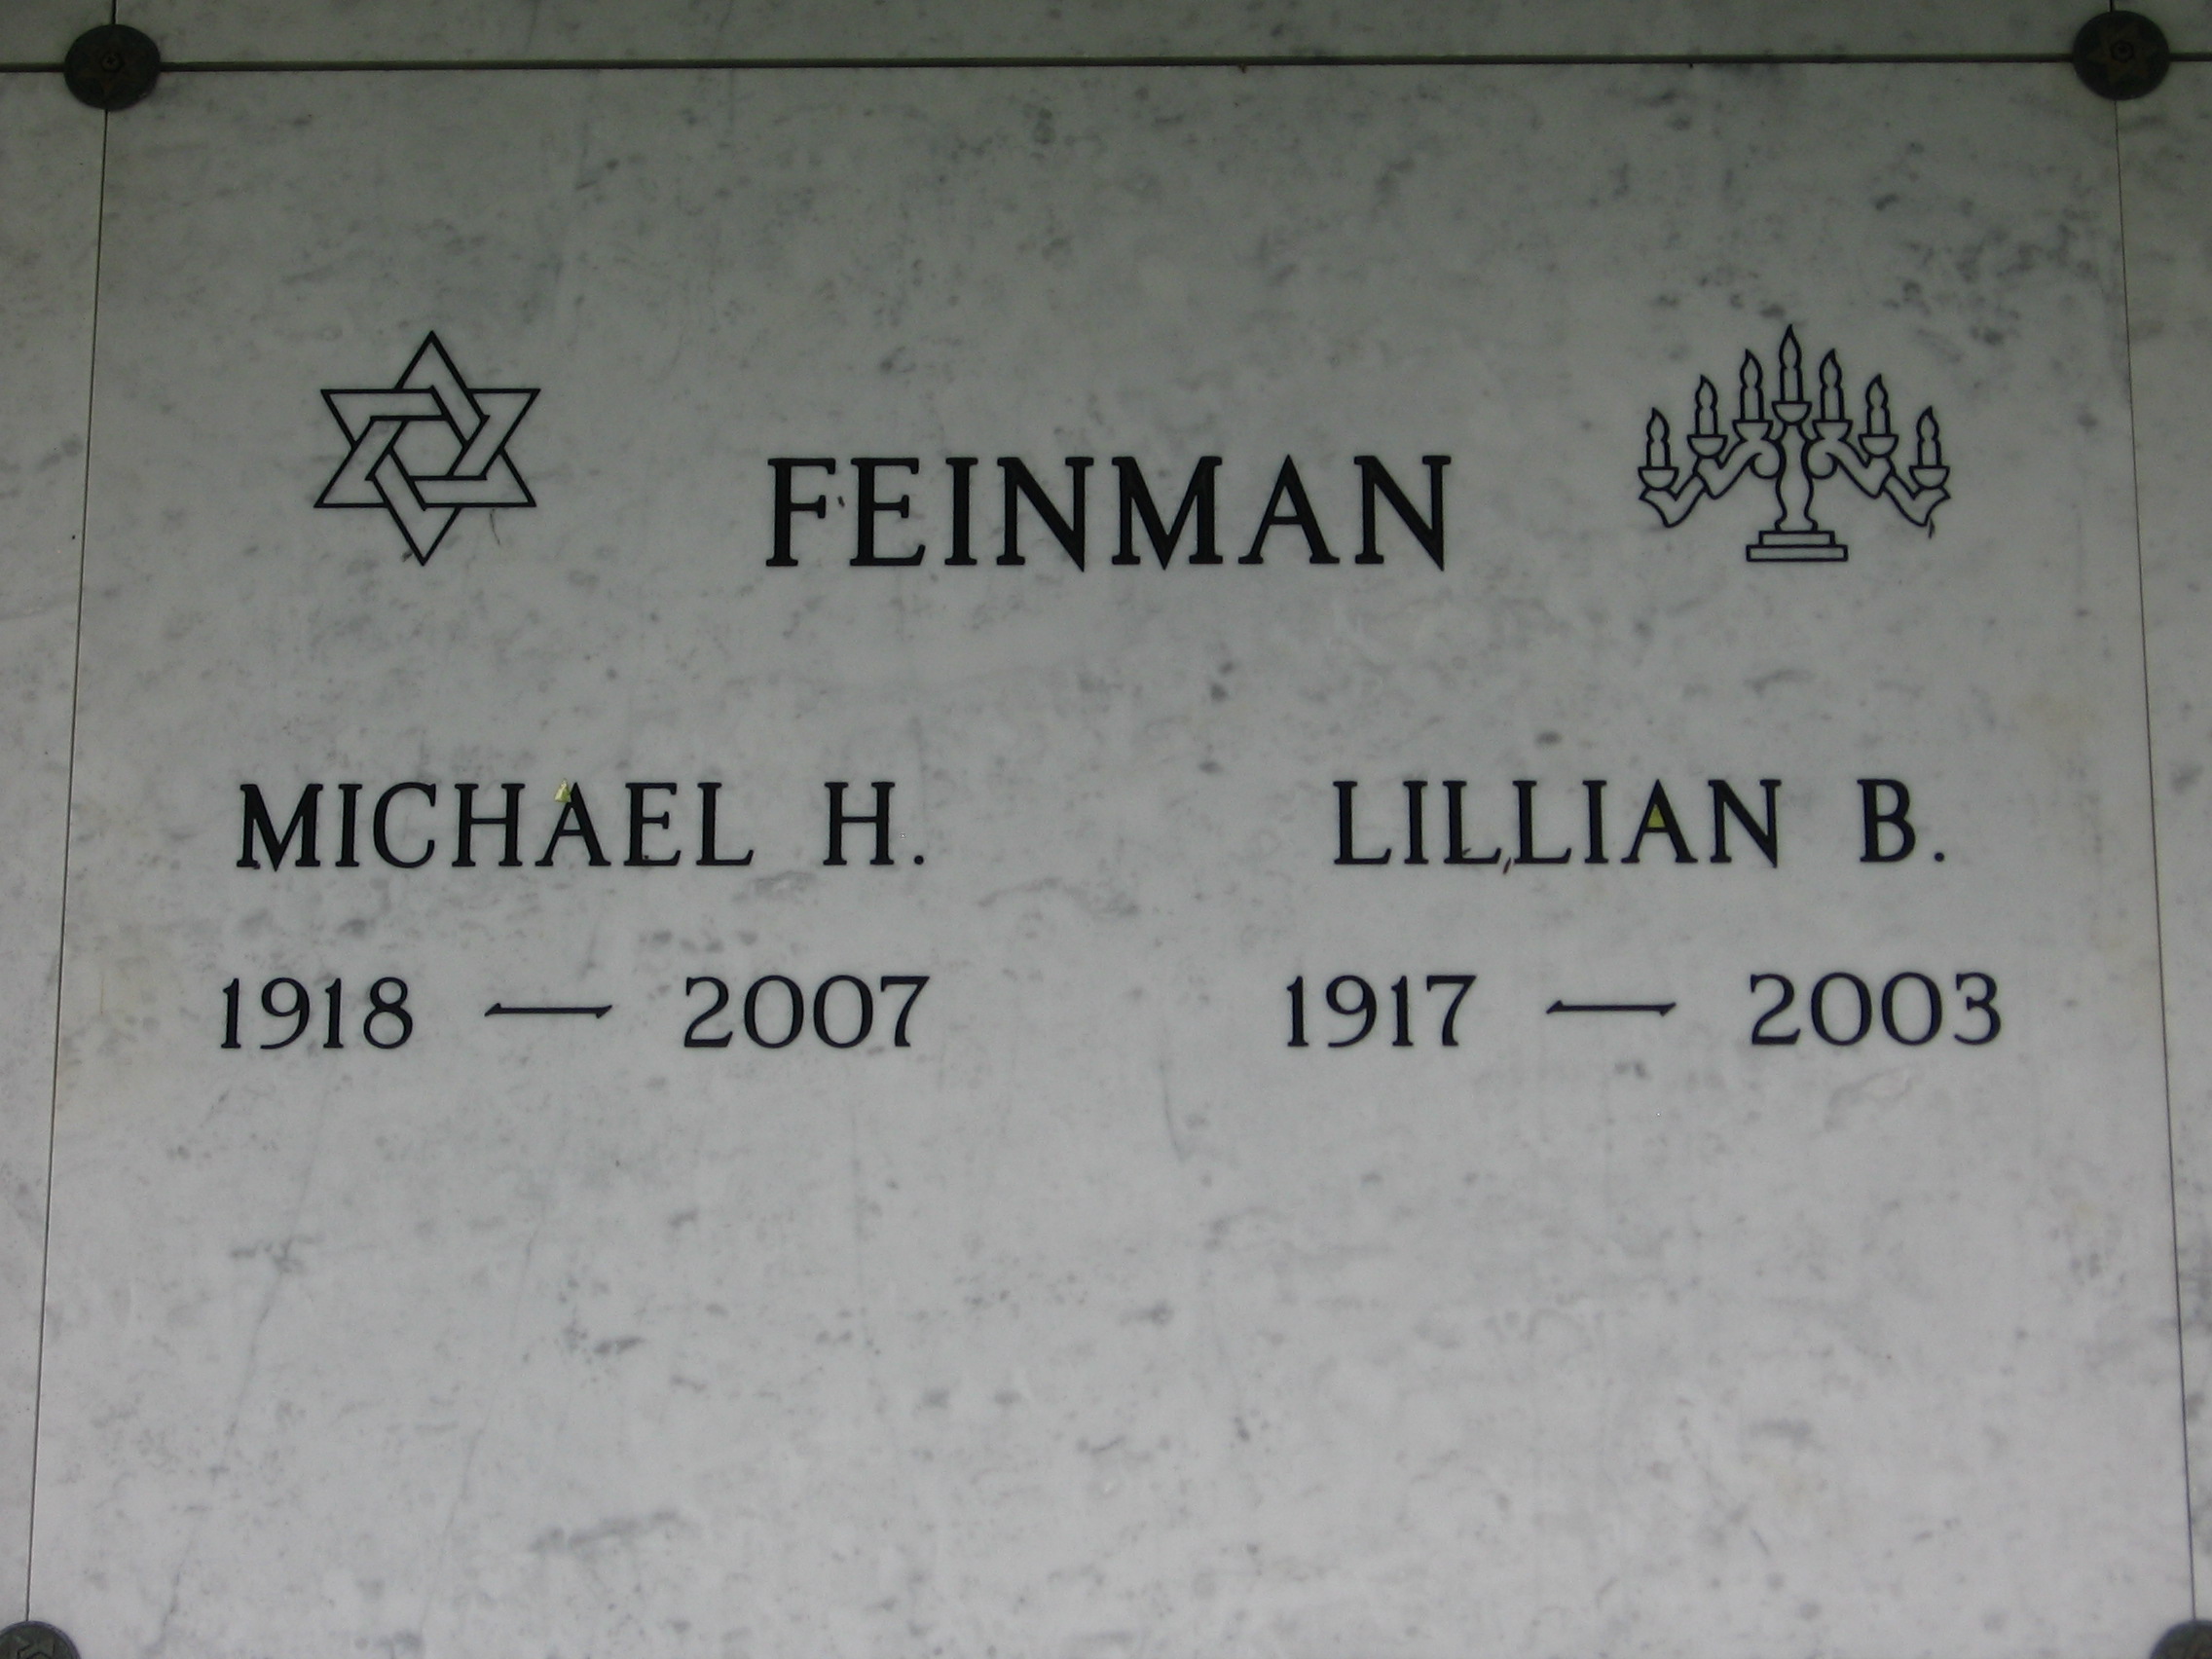 Michael H Feinman